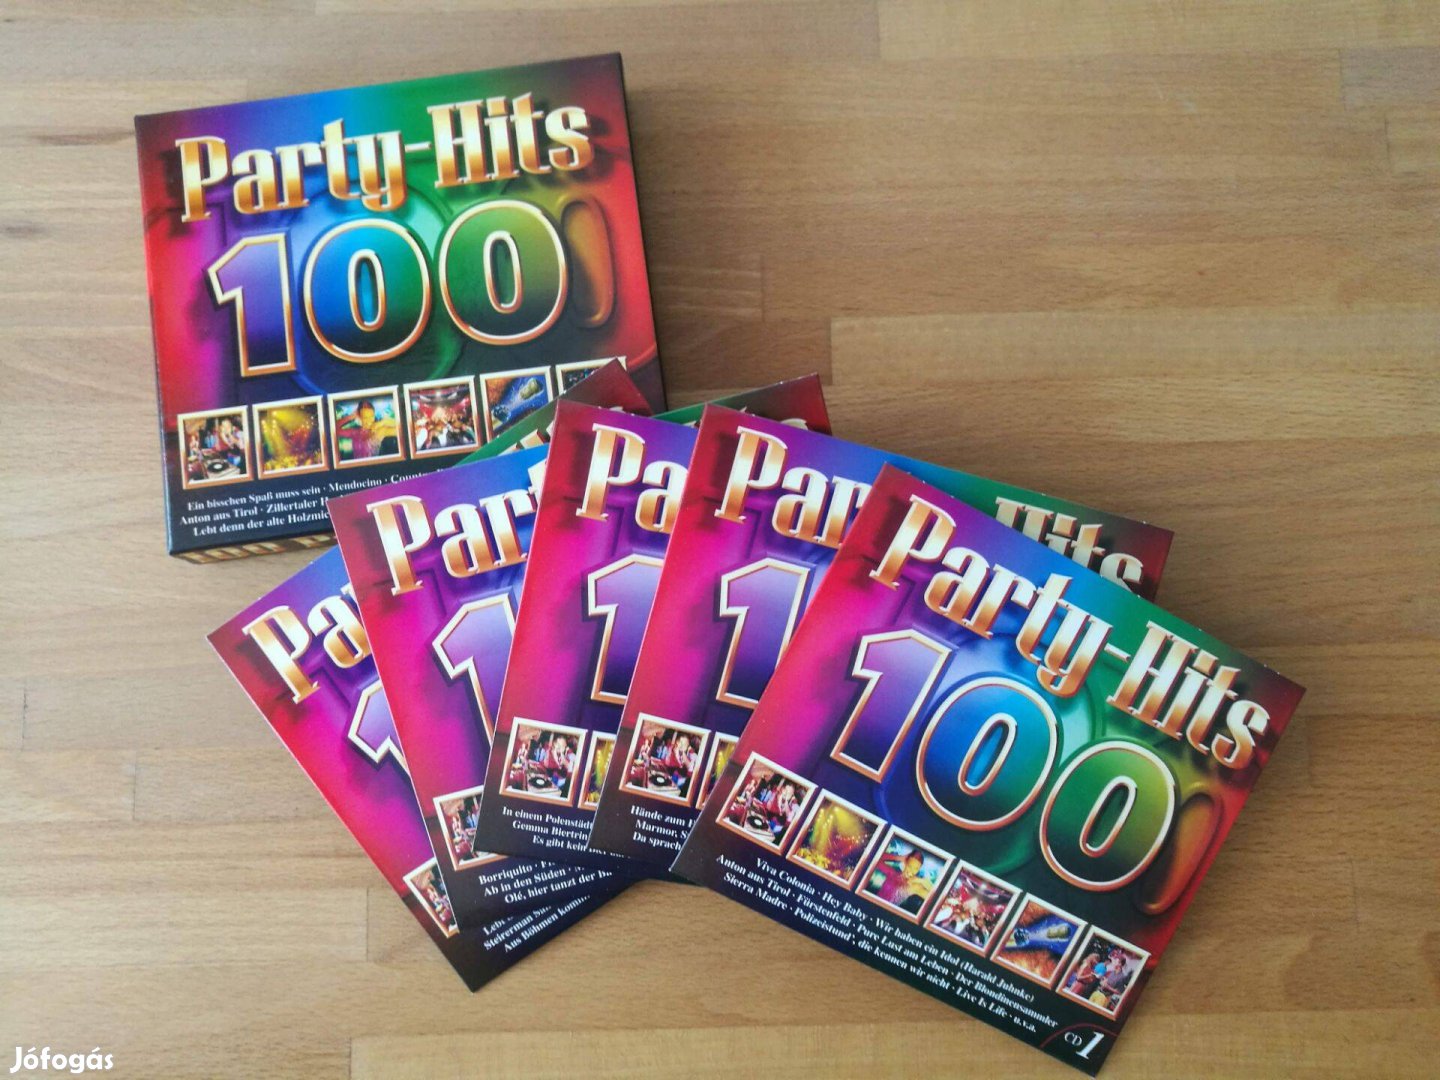 Party hits 100 (Austro Mechana, EU, 2006, 5CD box)